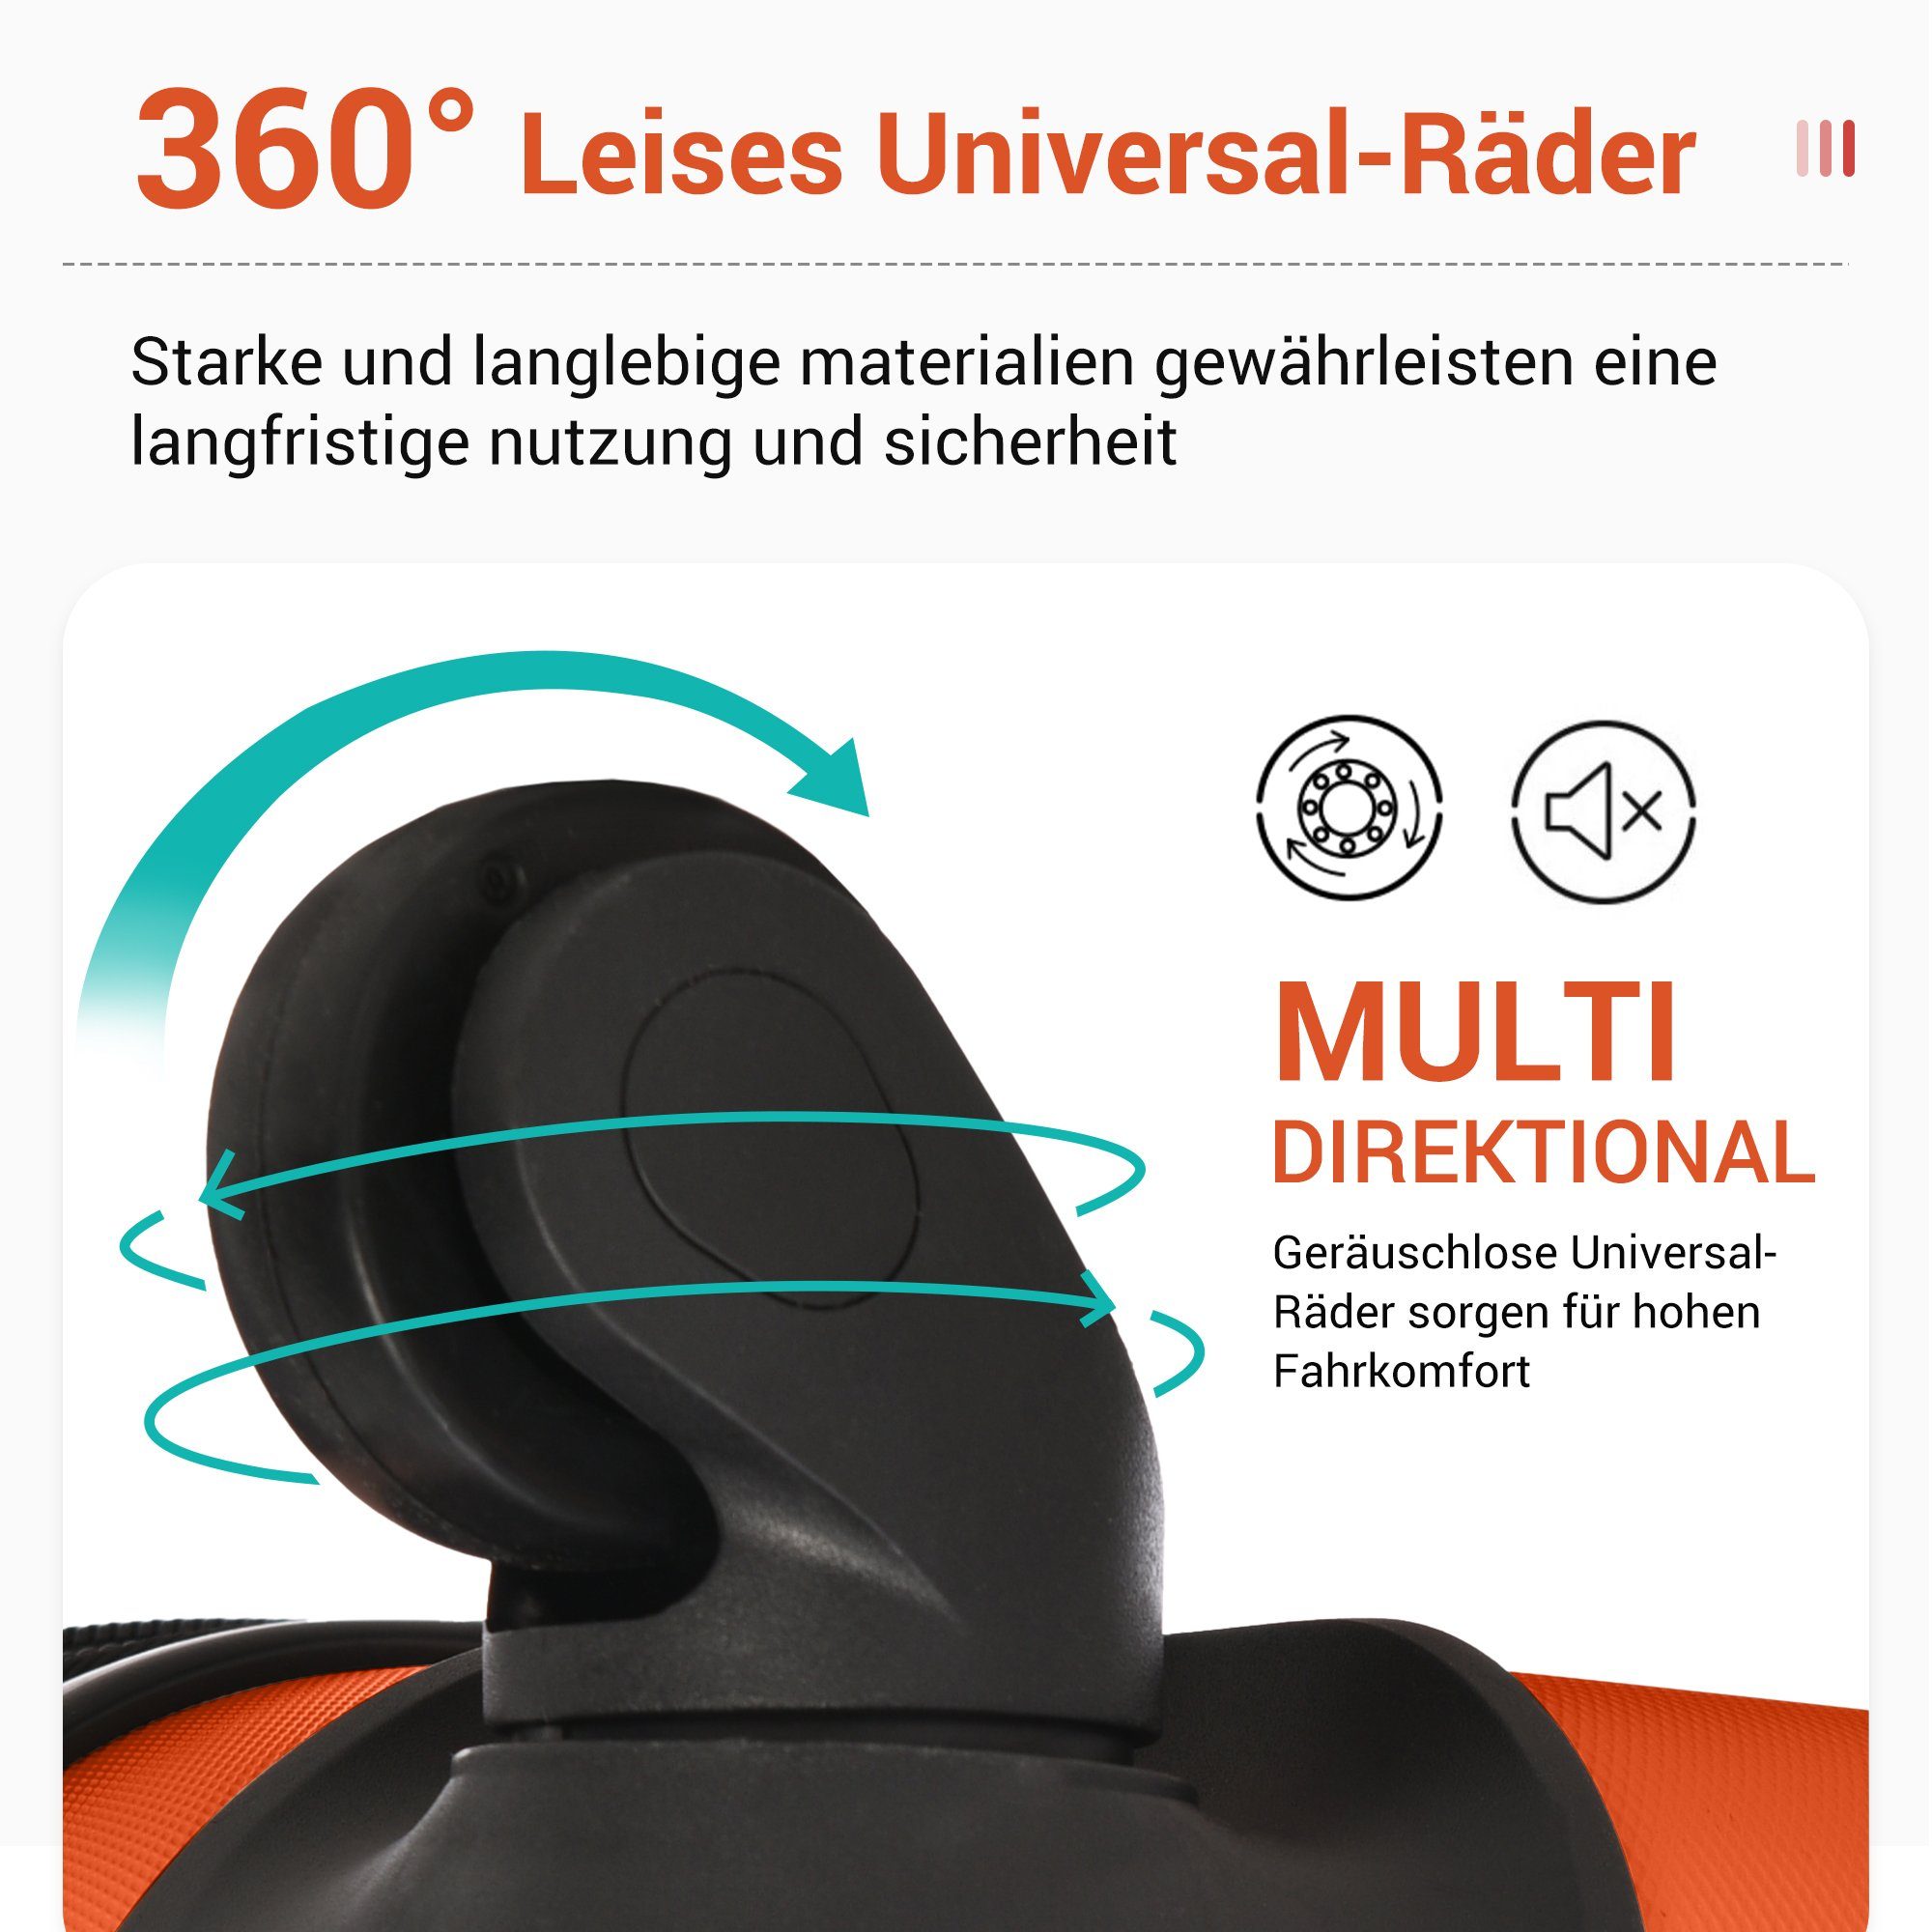 Rollen, Trolley Hartschalenkoffer Flieks ABS-Material Orange Hartschalen-Trolley, Handgepäck Reisekoffer, 4